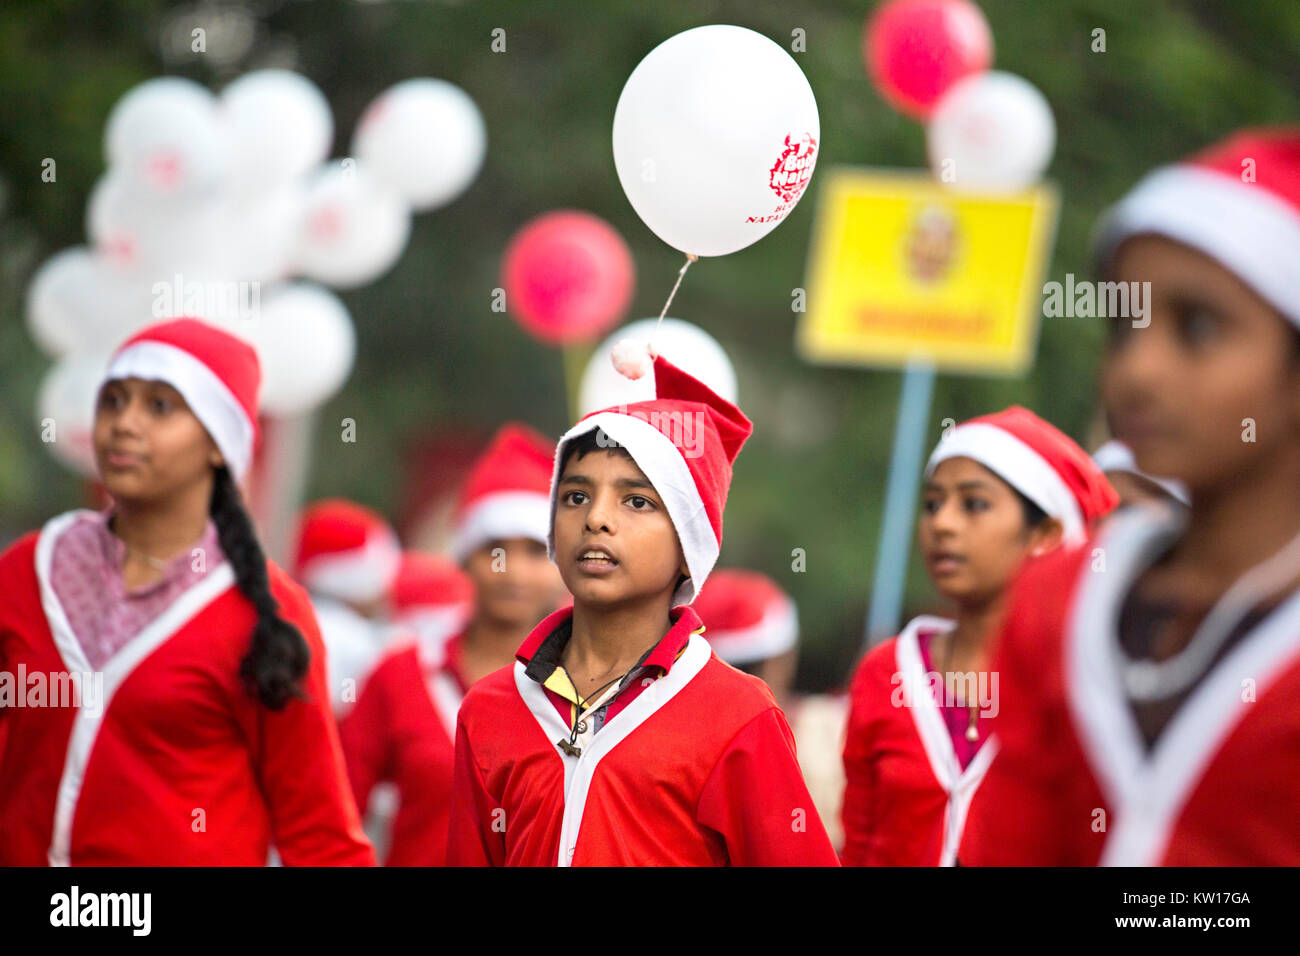 Buon Natale Kerala.Buon Natale Kerala High Resolution Stock Photography And Images Alamy